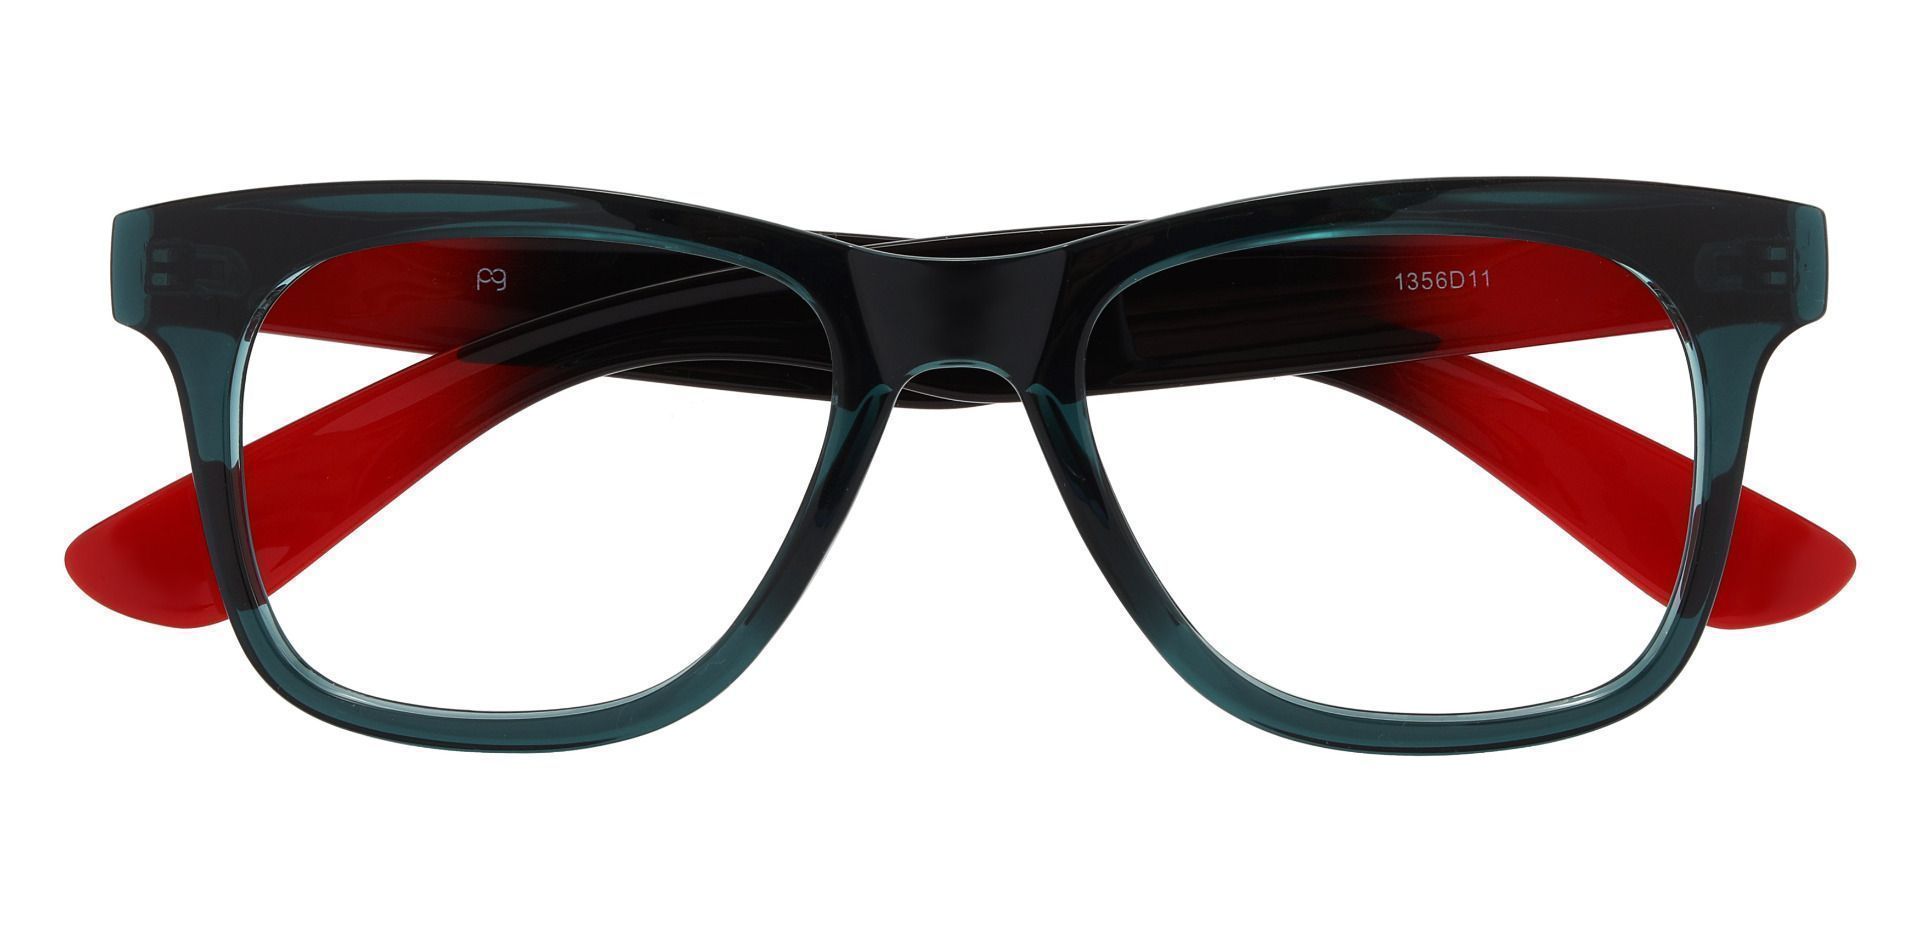 Hurley Men's Square Eyeglasses, HMO119 West Coast, Black/Crystal